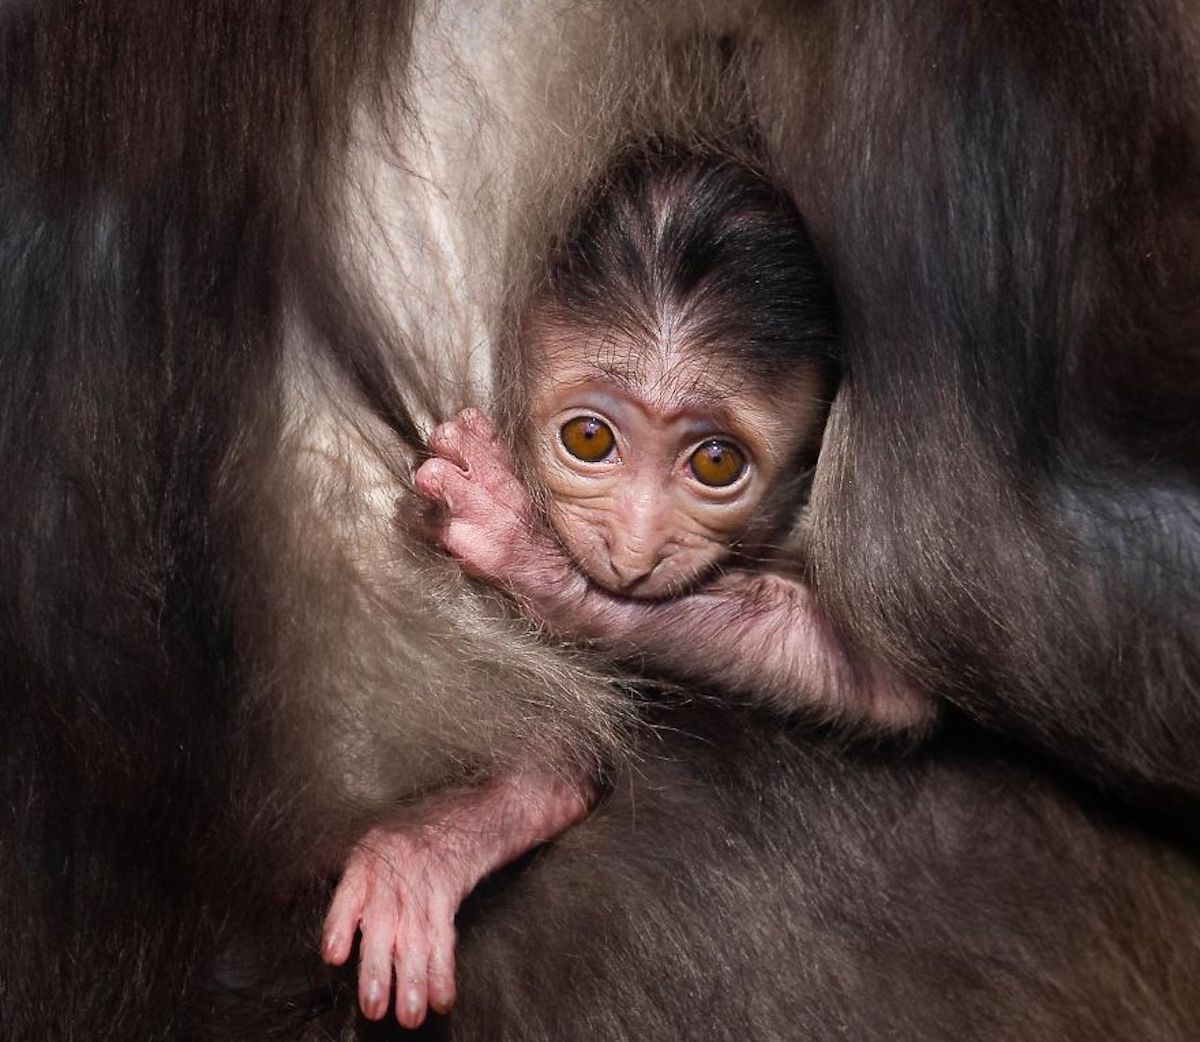 Photograph of Affectionate Animals by Goran Anastasovski